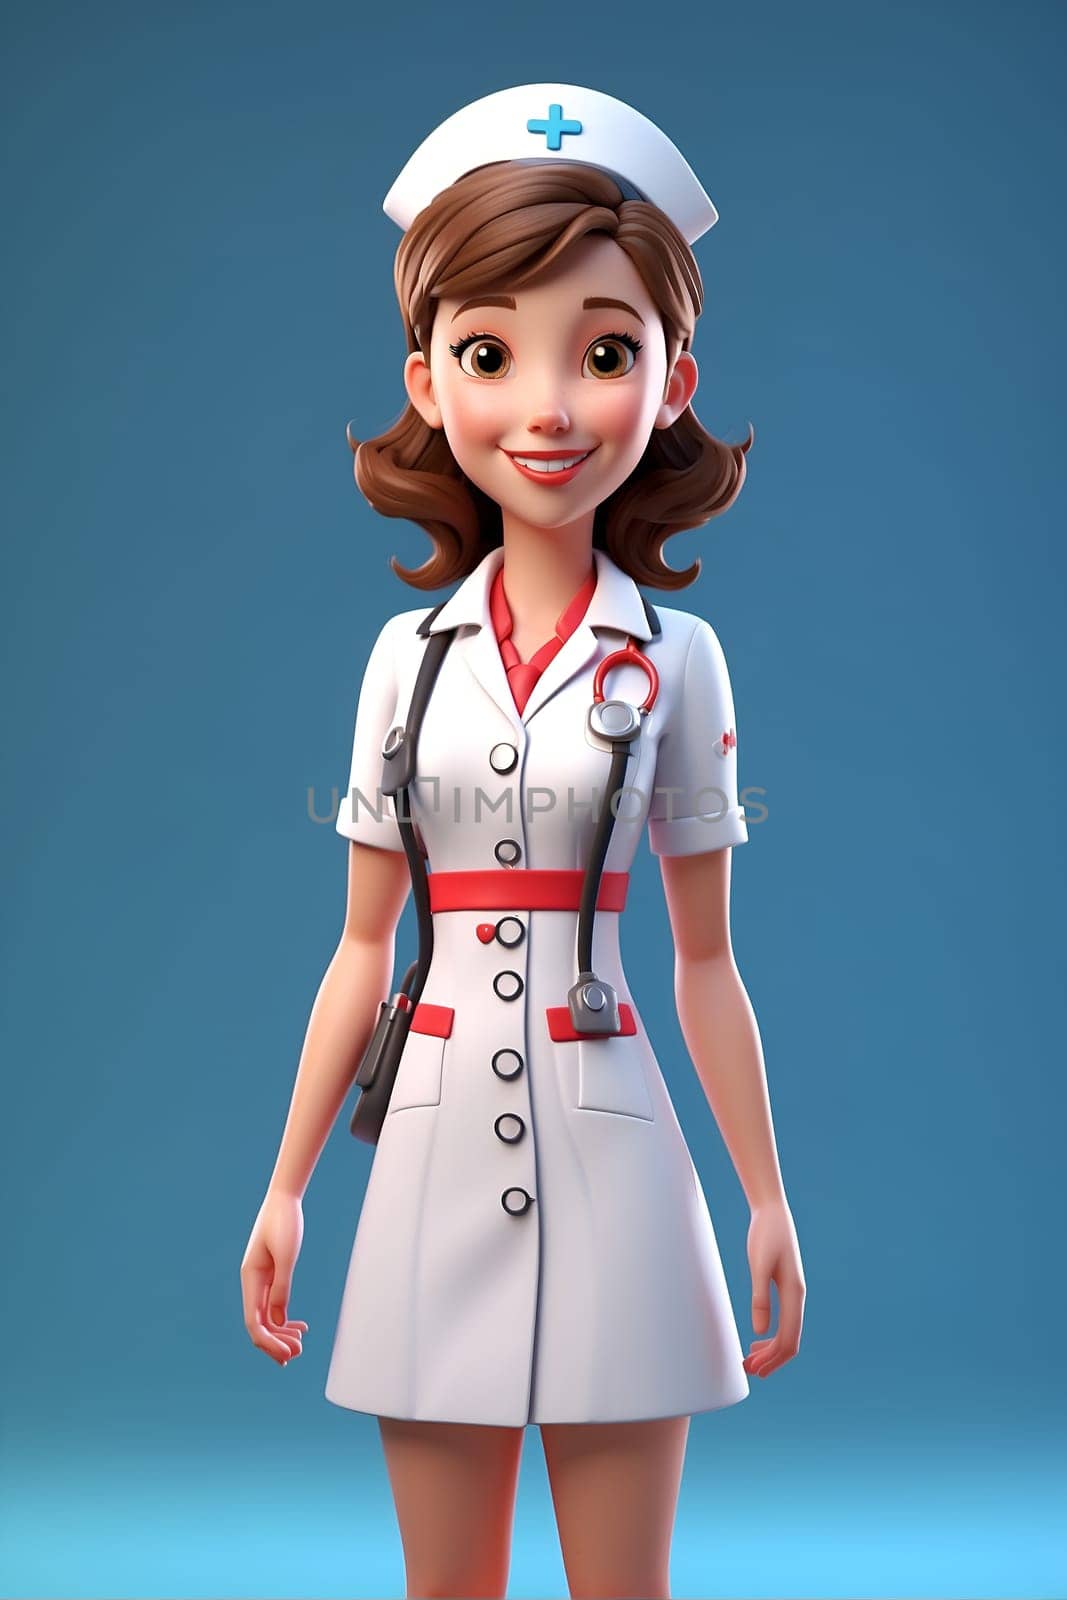 Woman Nurse Wearing Stethoscope and Uniform for Medical Examination. Generative AI. by artofphoto